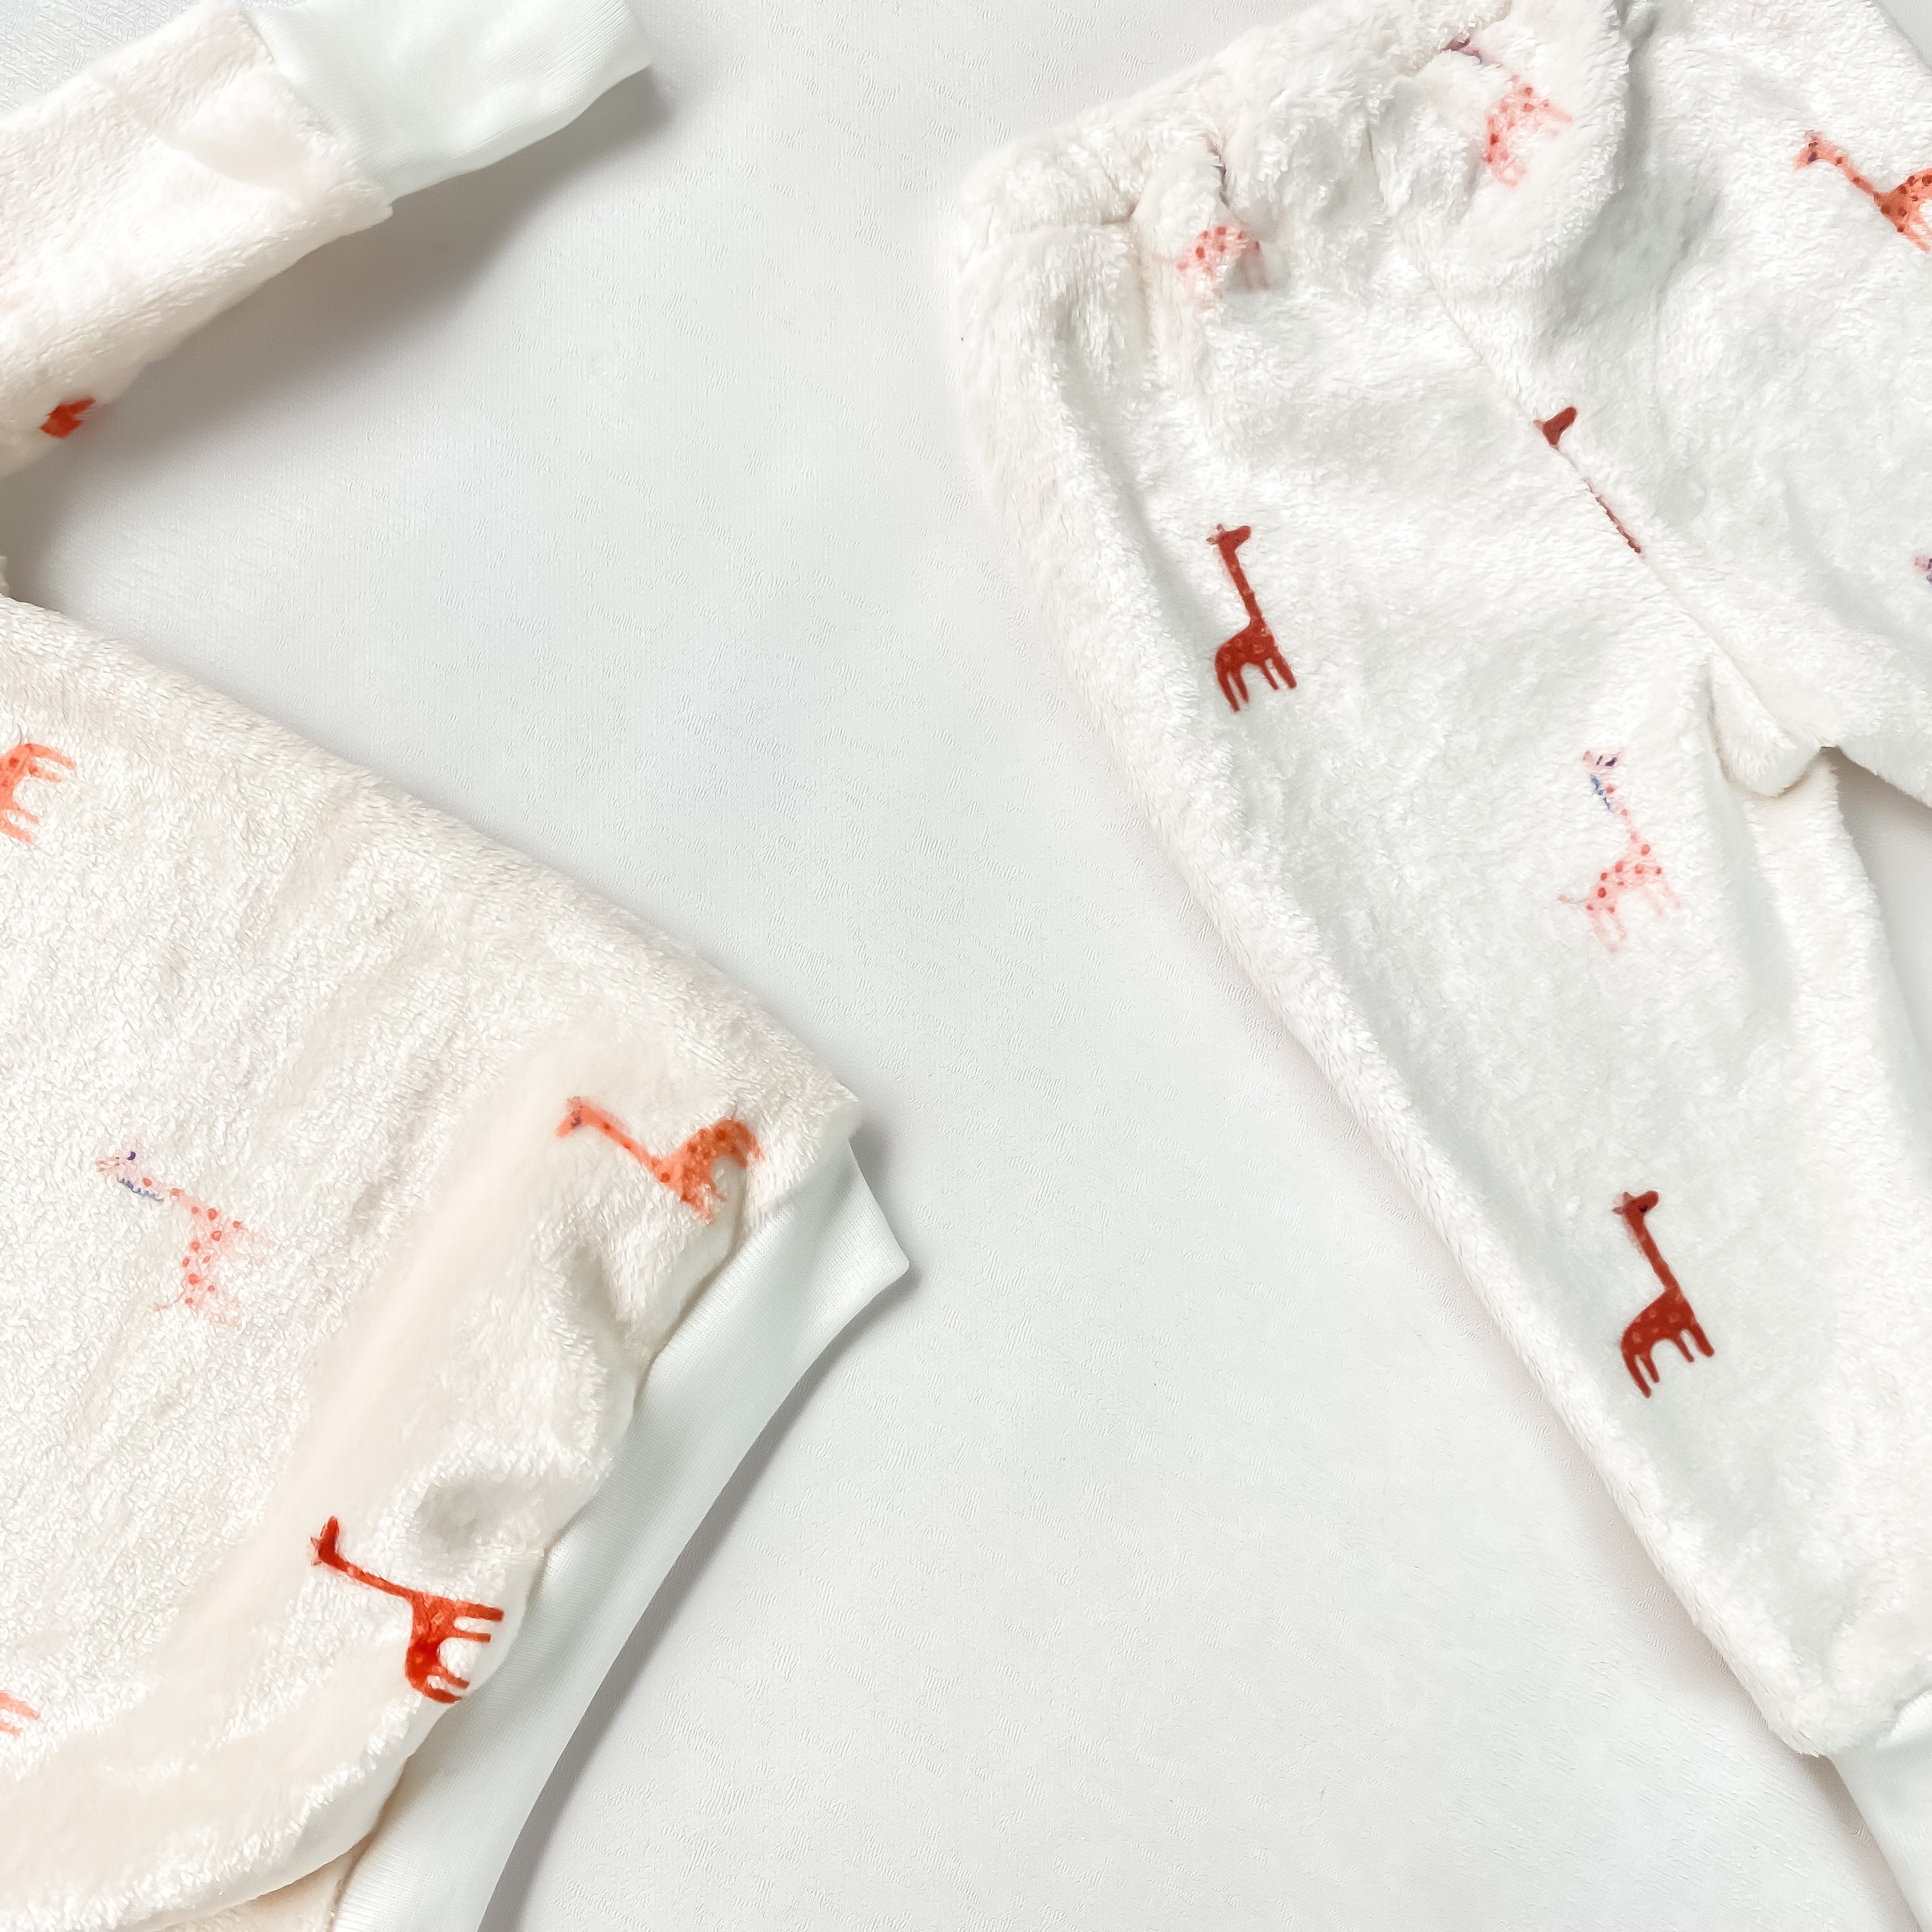 Pijama para Bebé 2 piezas Recien Nacido - Jirafas